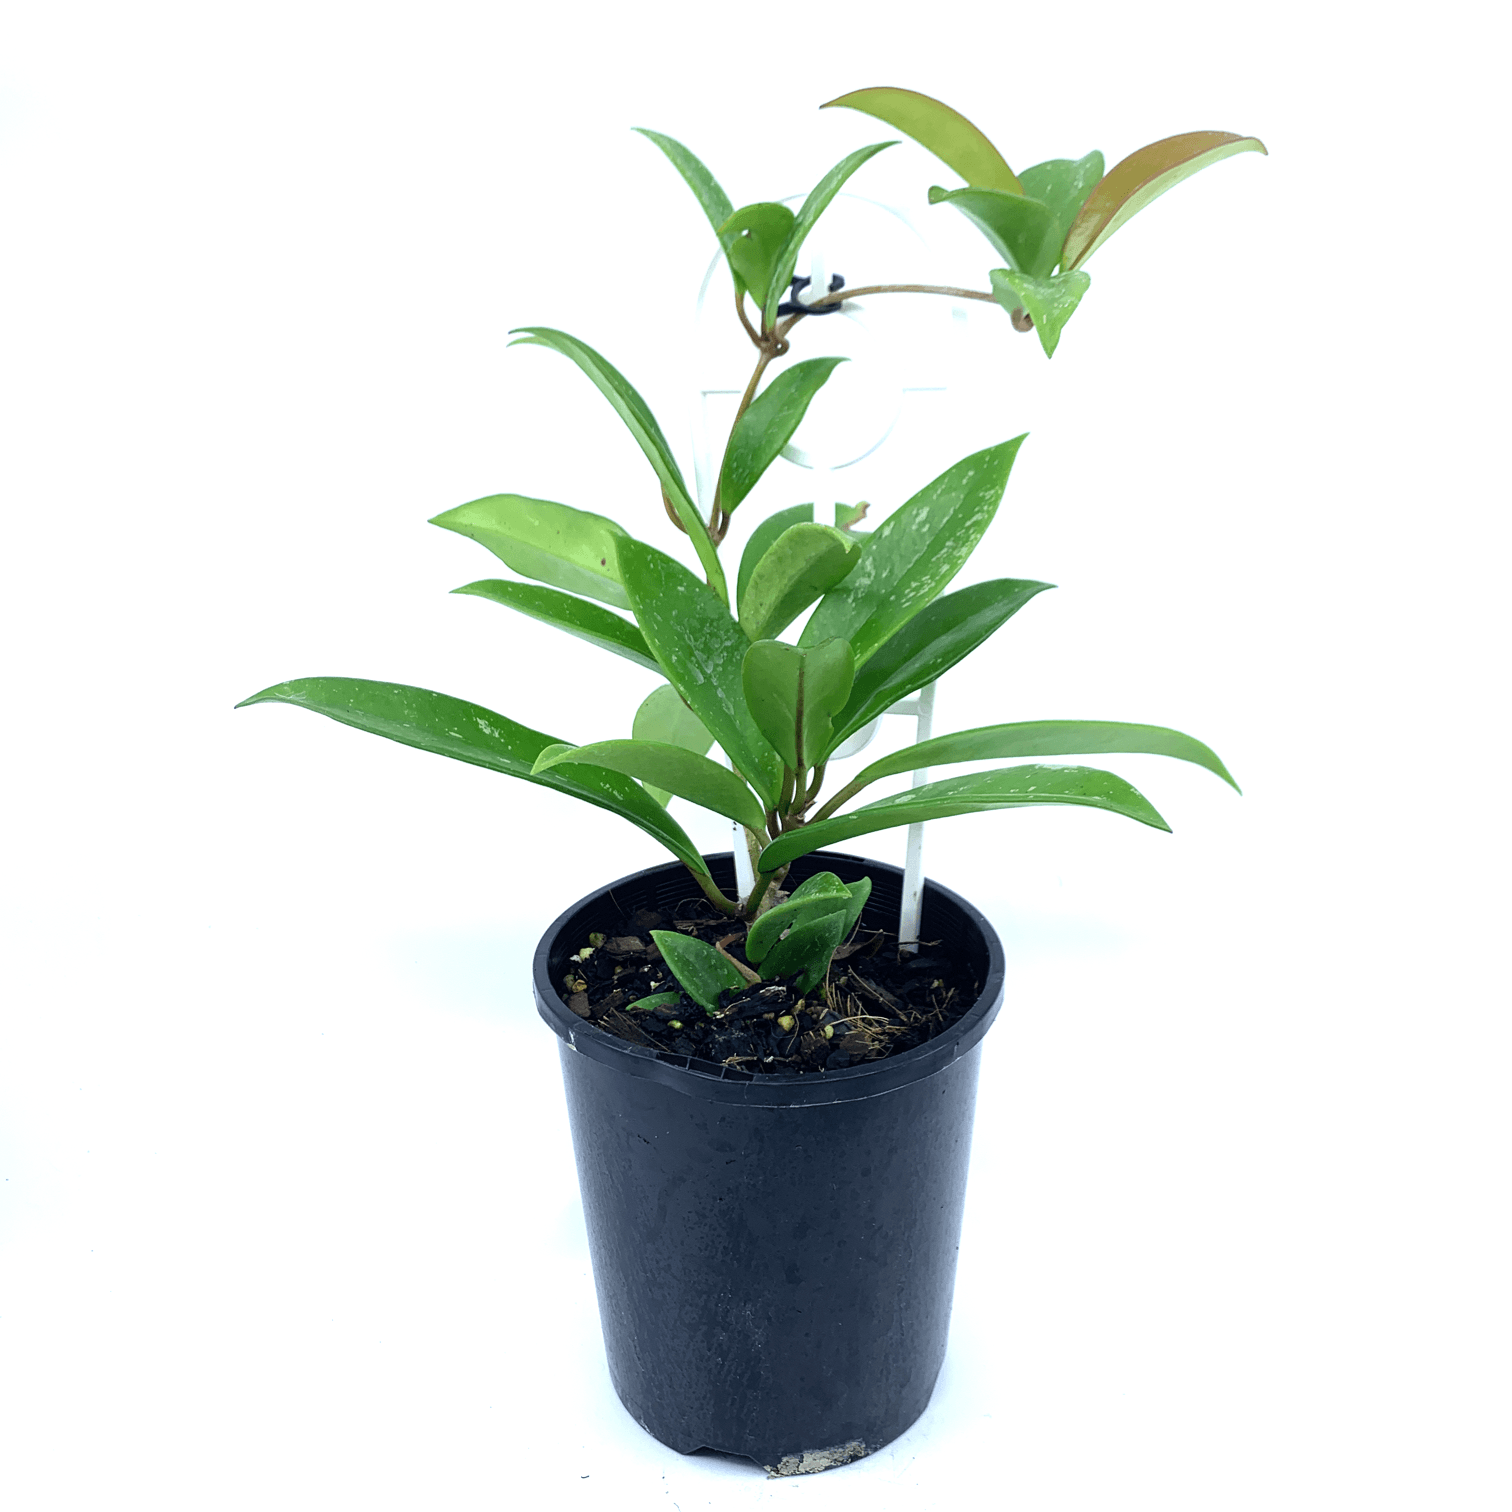 Hoya - Publicalyx - The Plant Buddies